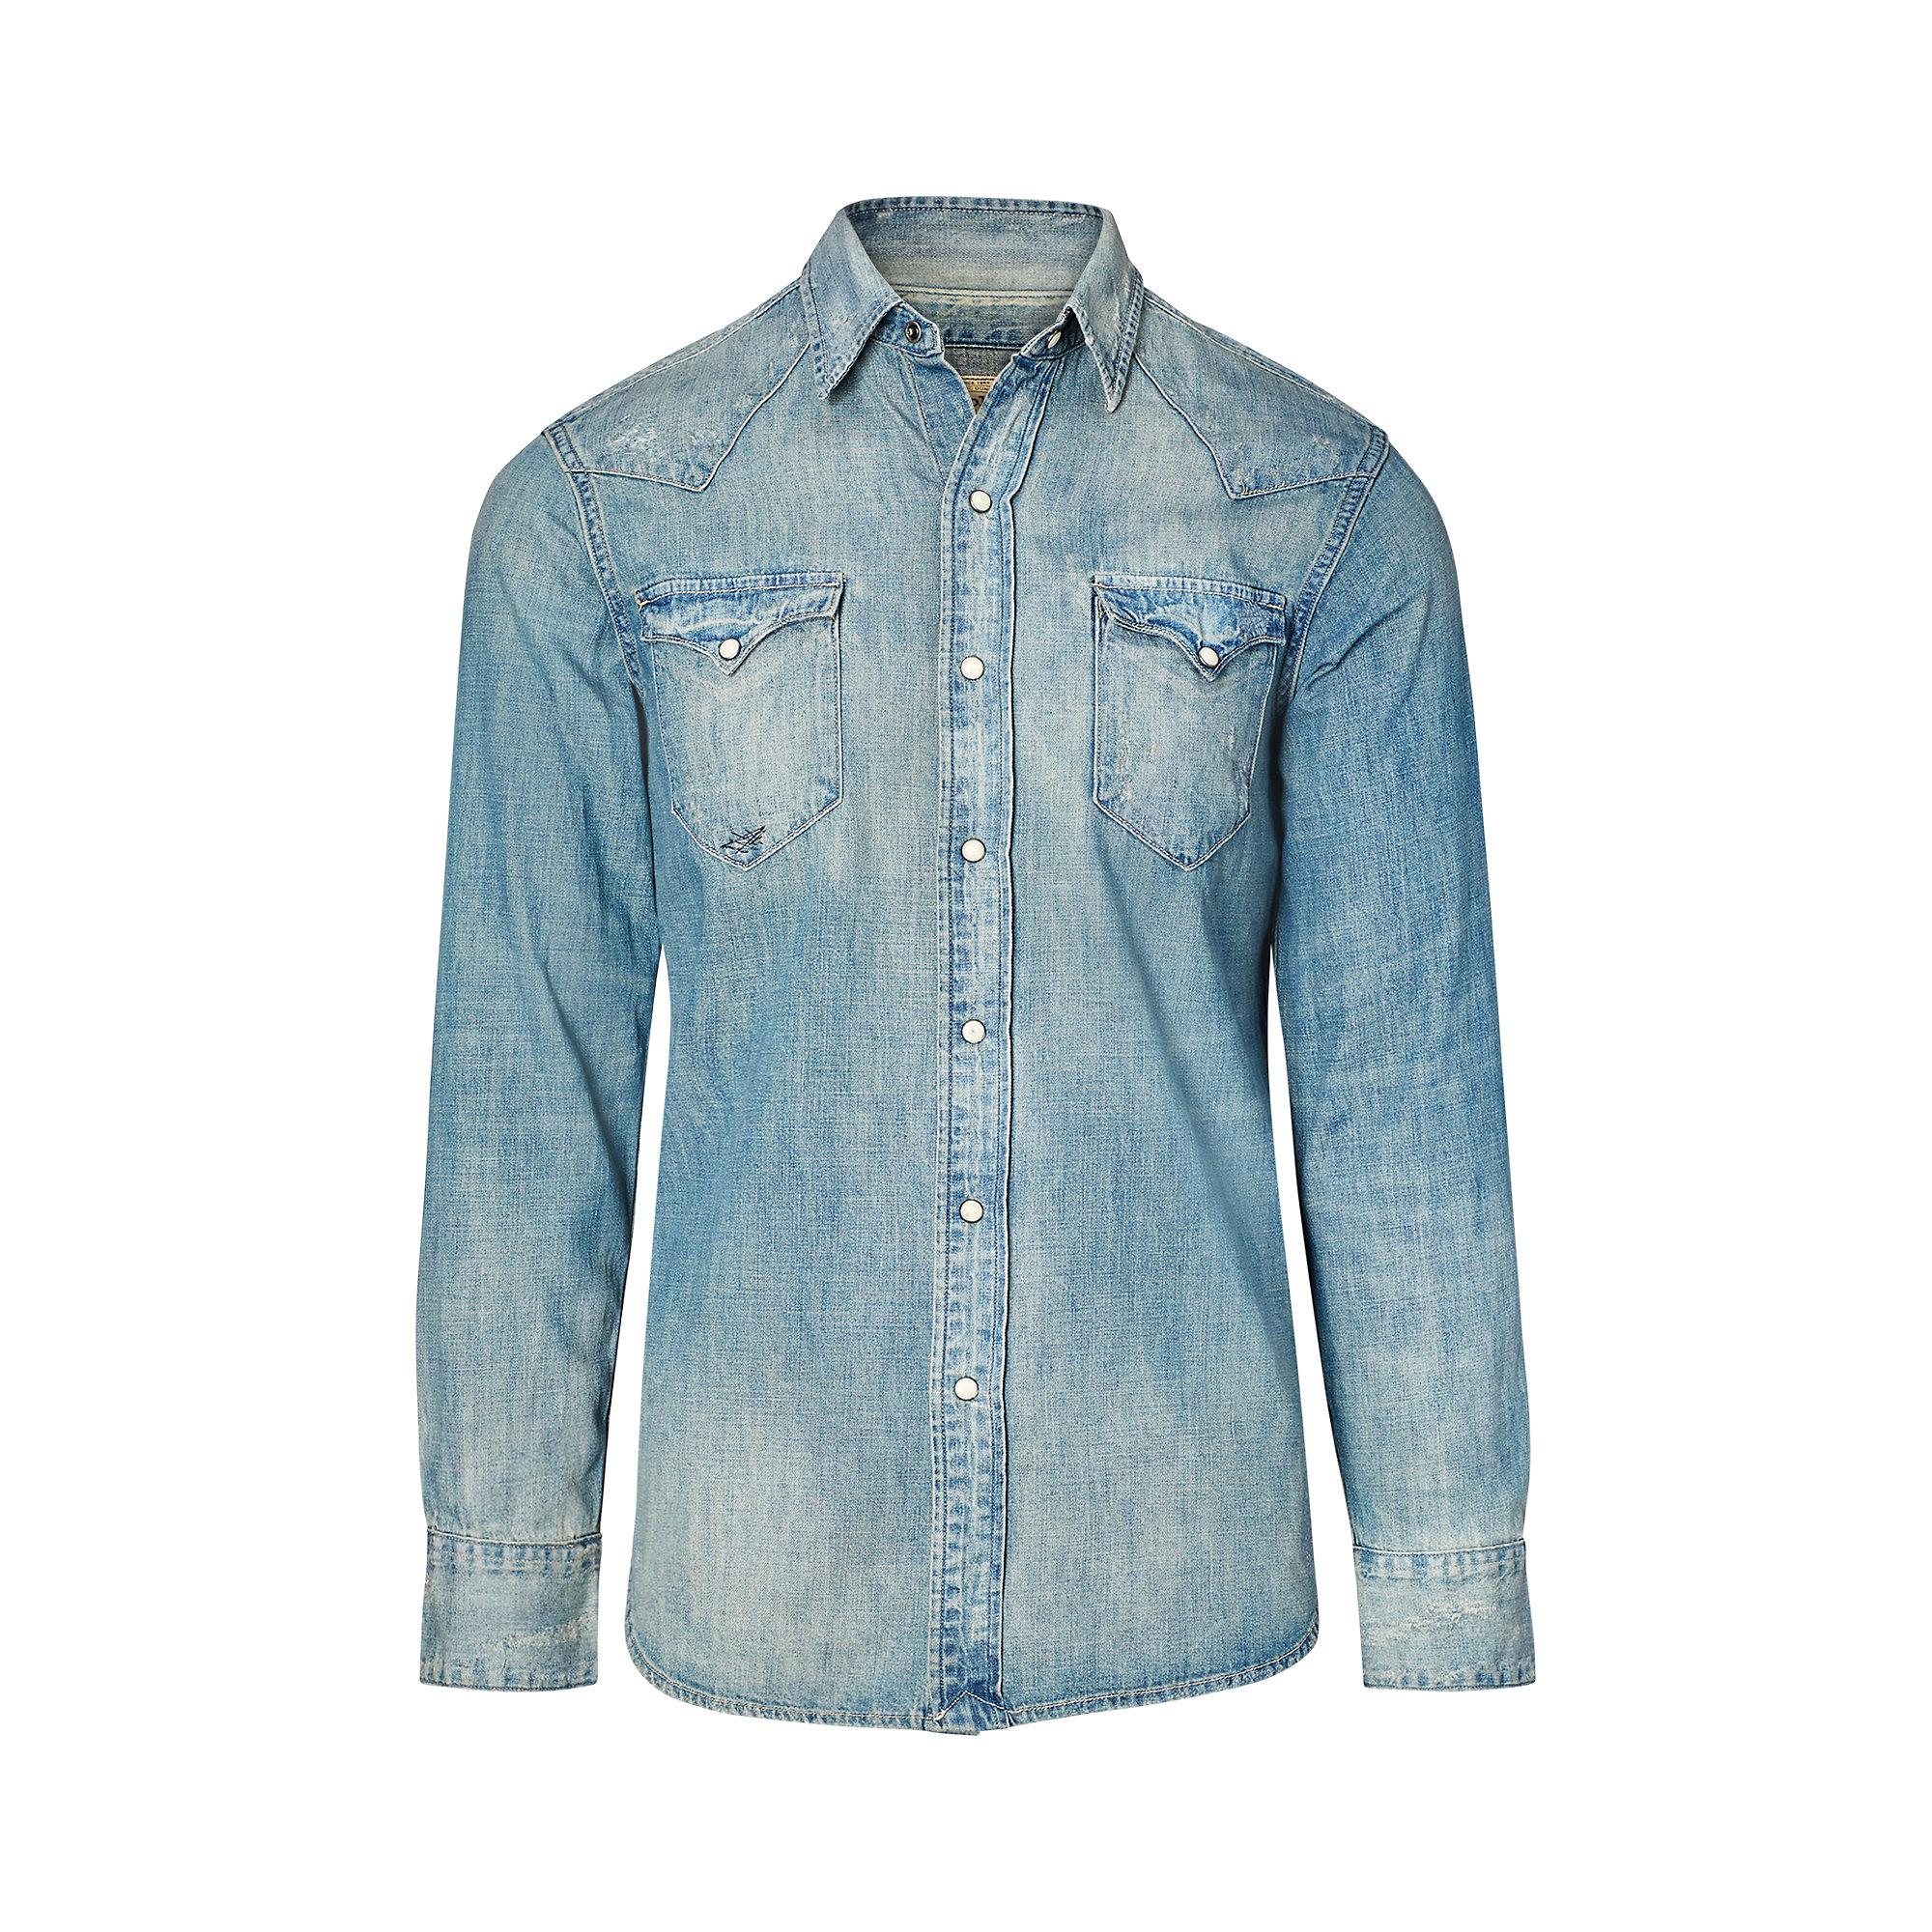 Lyst - Polo Ralph Lauren Distressed Denim Western Shirt in Blue for Men